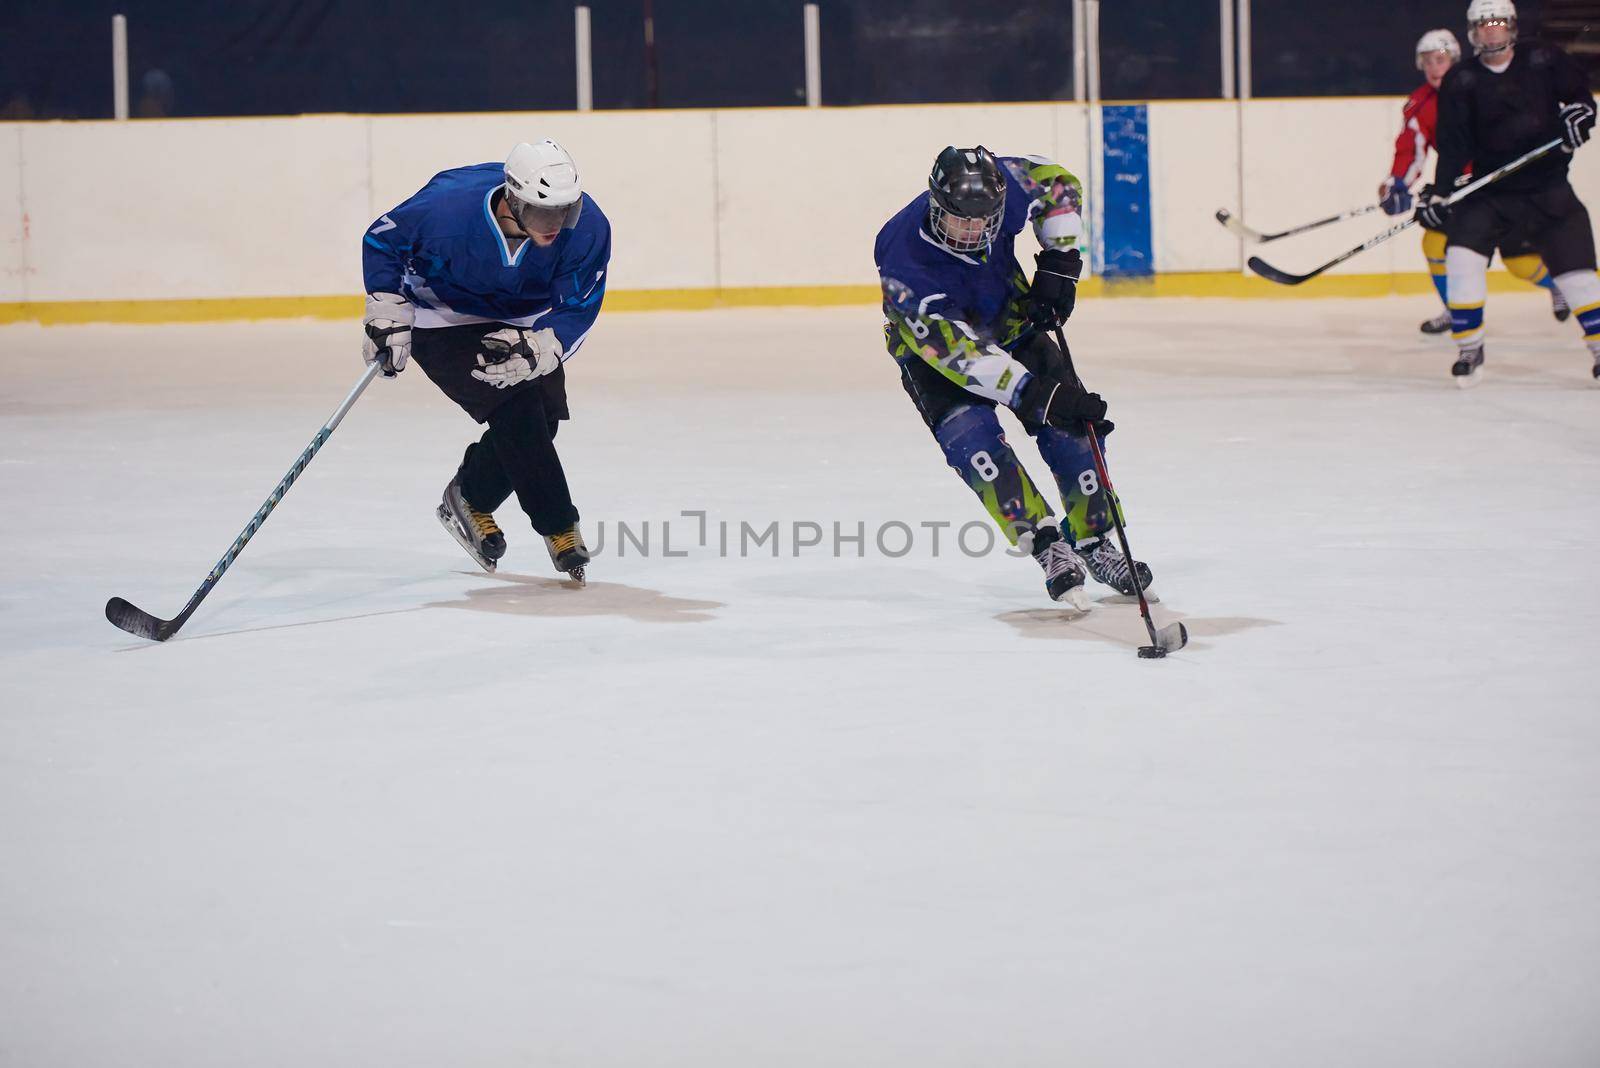 ice hockey sport players by dotshock